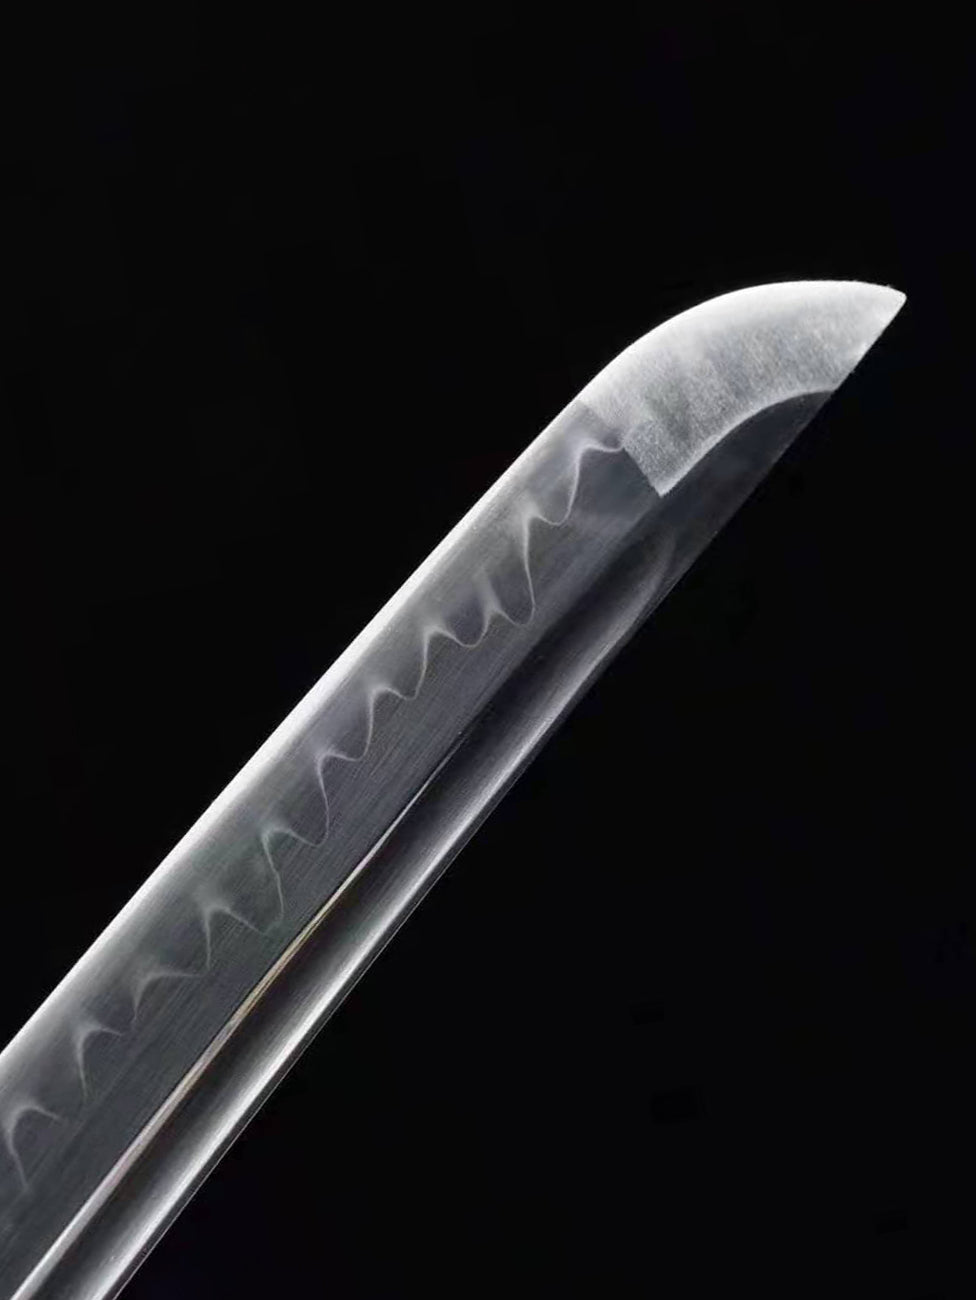 Long sword katana knife 1095 steelClay Tempered